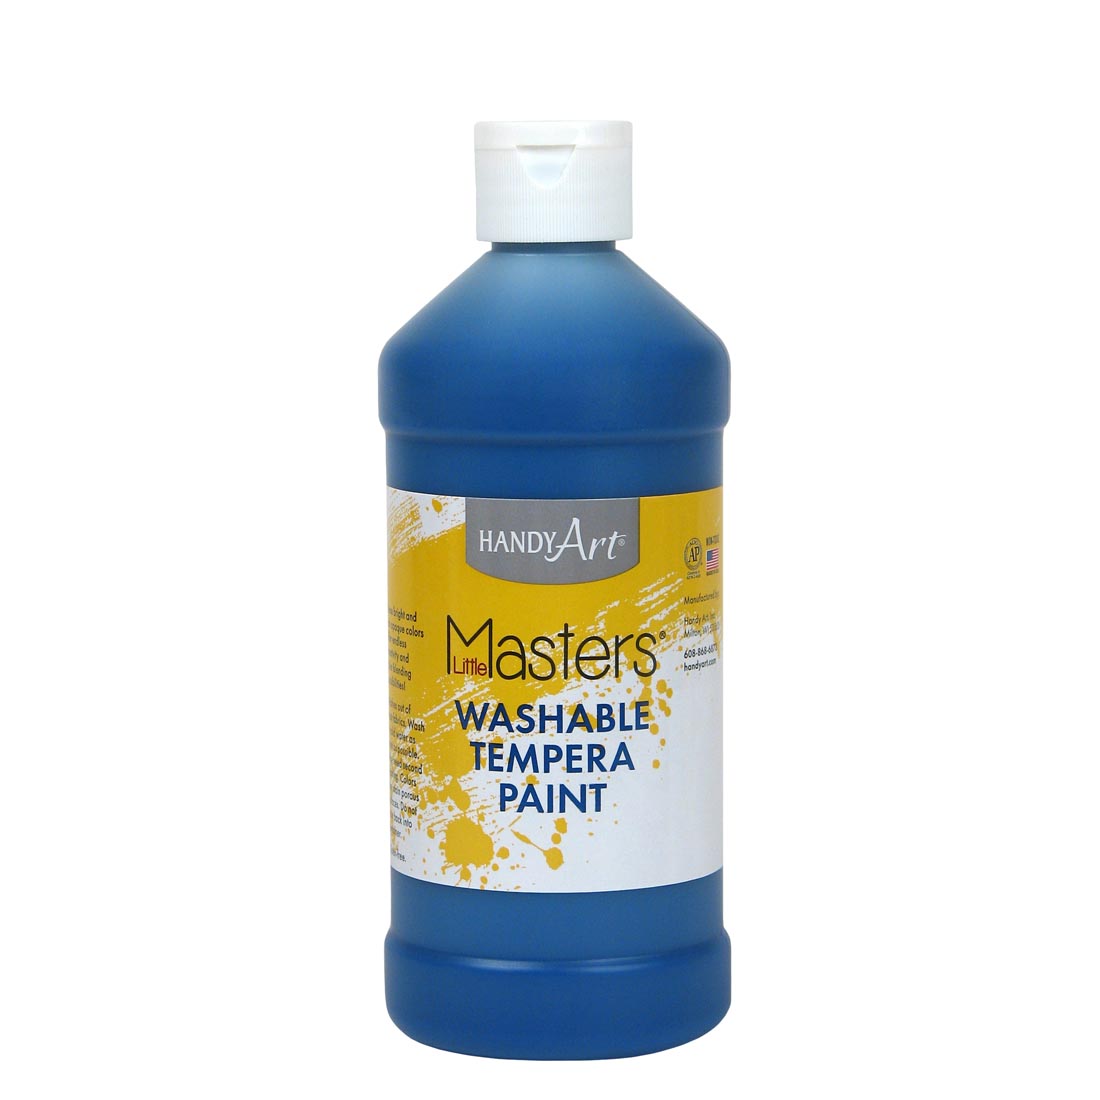 Pint bottle of Blue Handy Art Little Masters Washable Tempera Paint